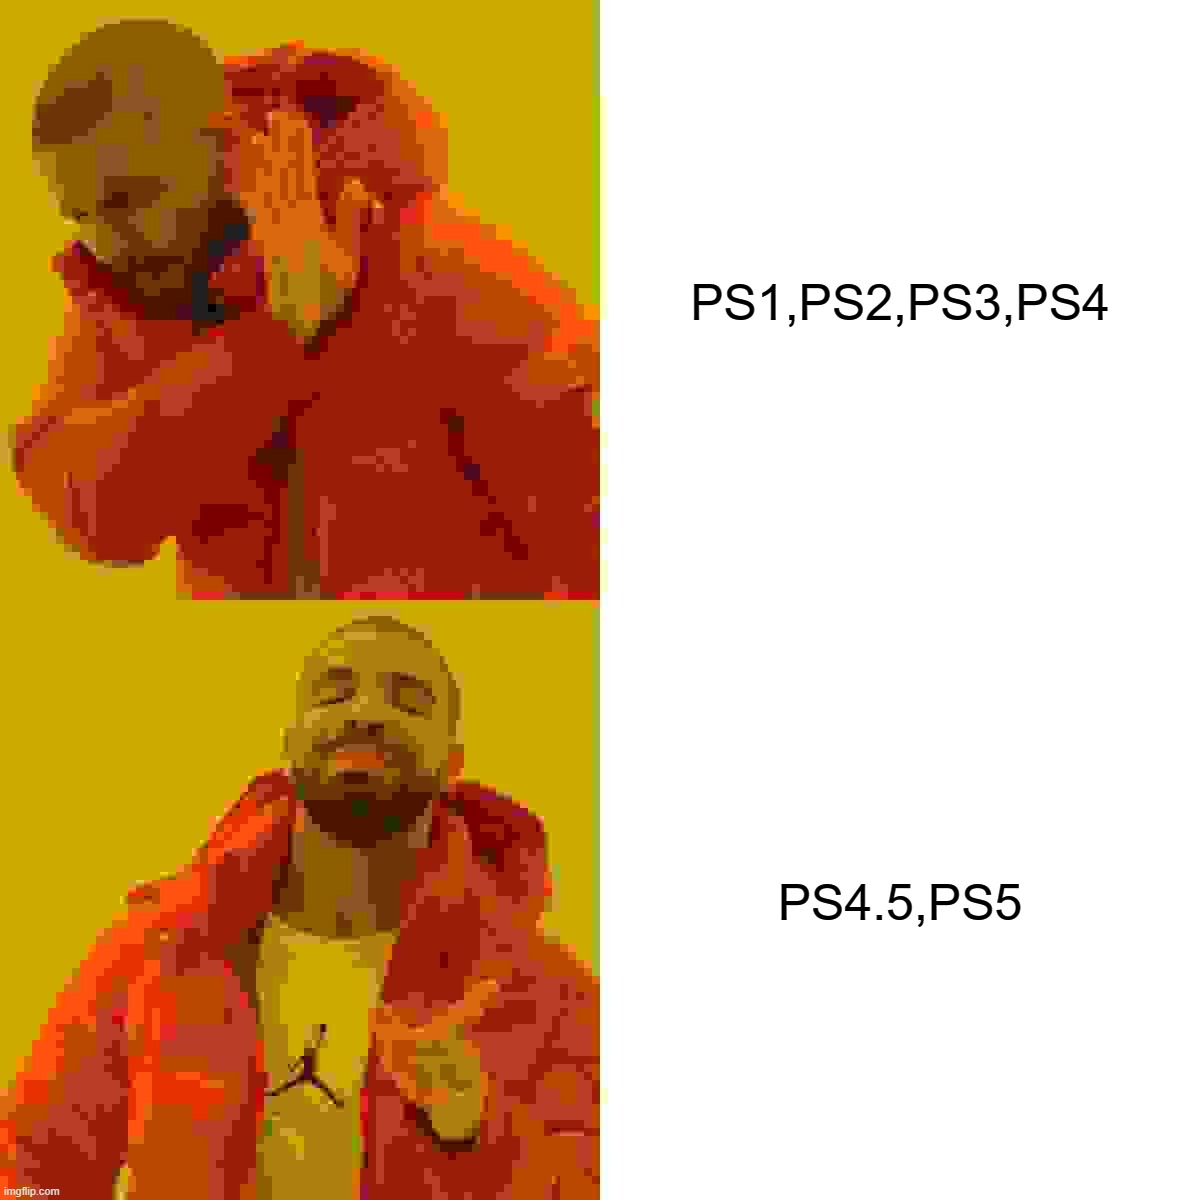 Drake Hotline Bling Meme | PS1,PS2,PS3,PS4; PS4.5,PS5 | image tagged in memes,drake hotline bling | made w/ Imgflip meme maker